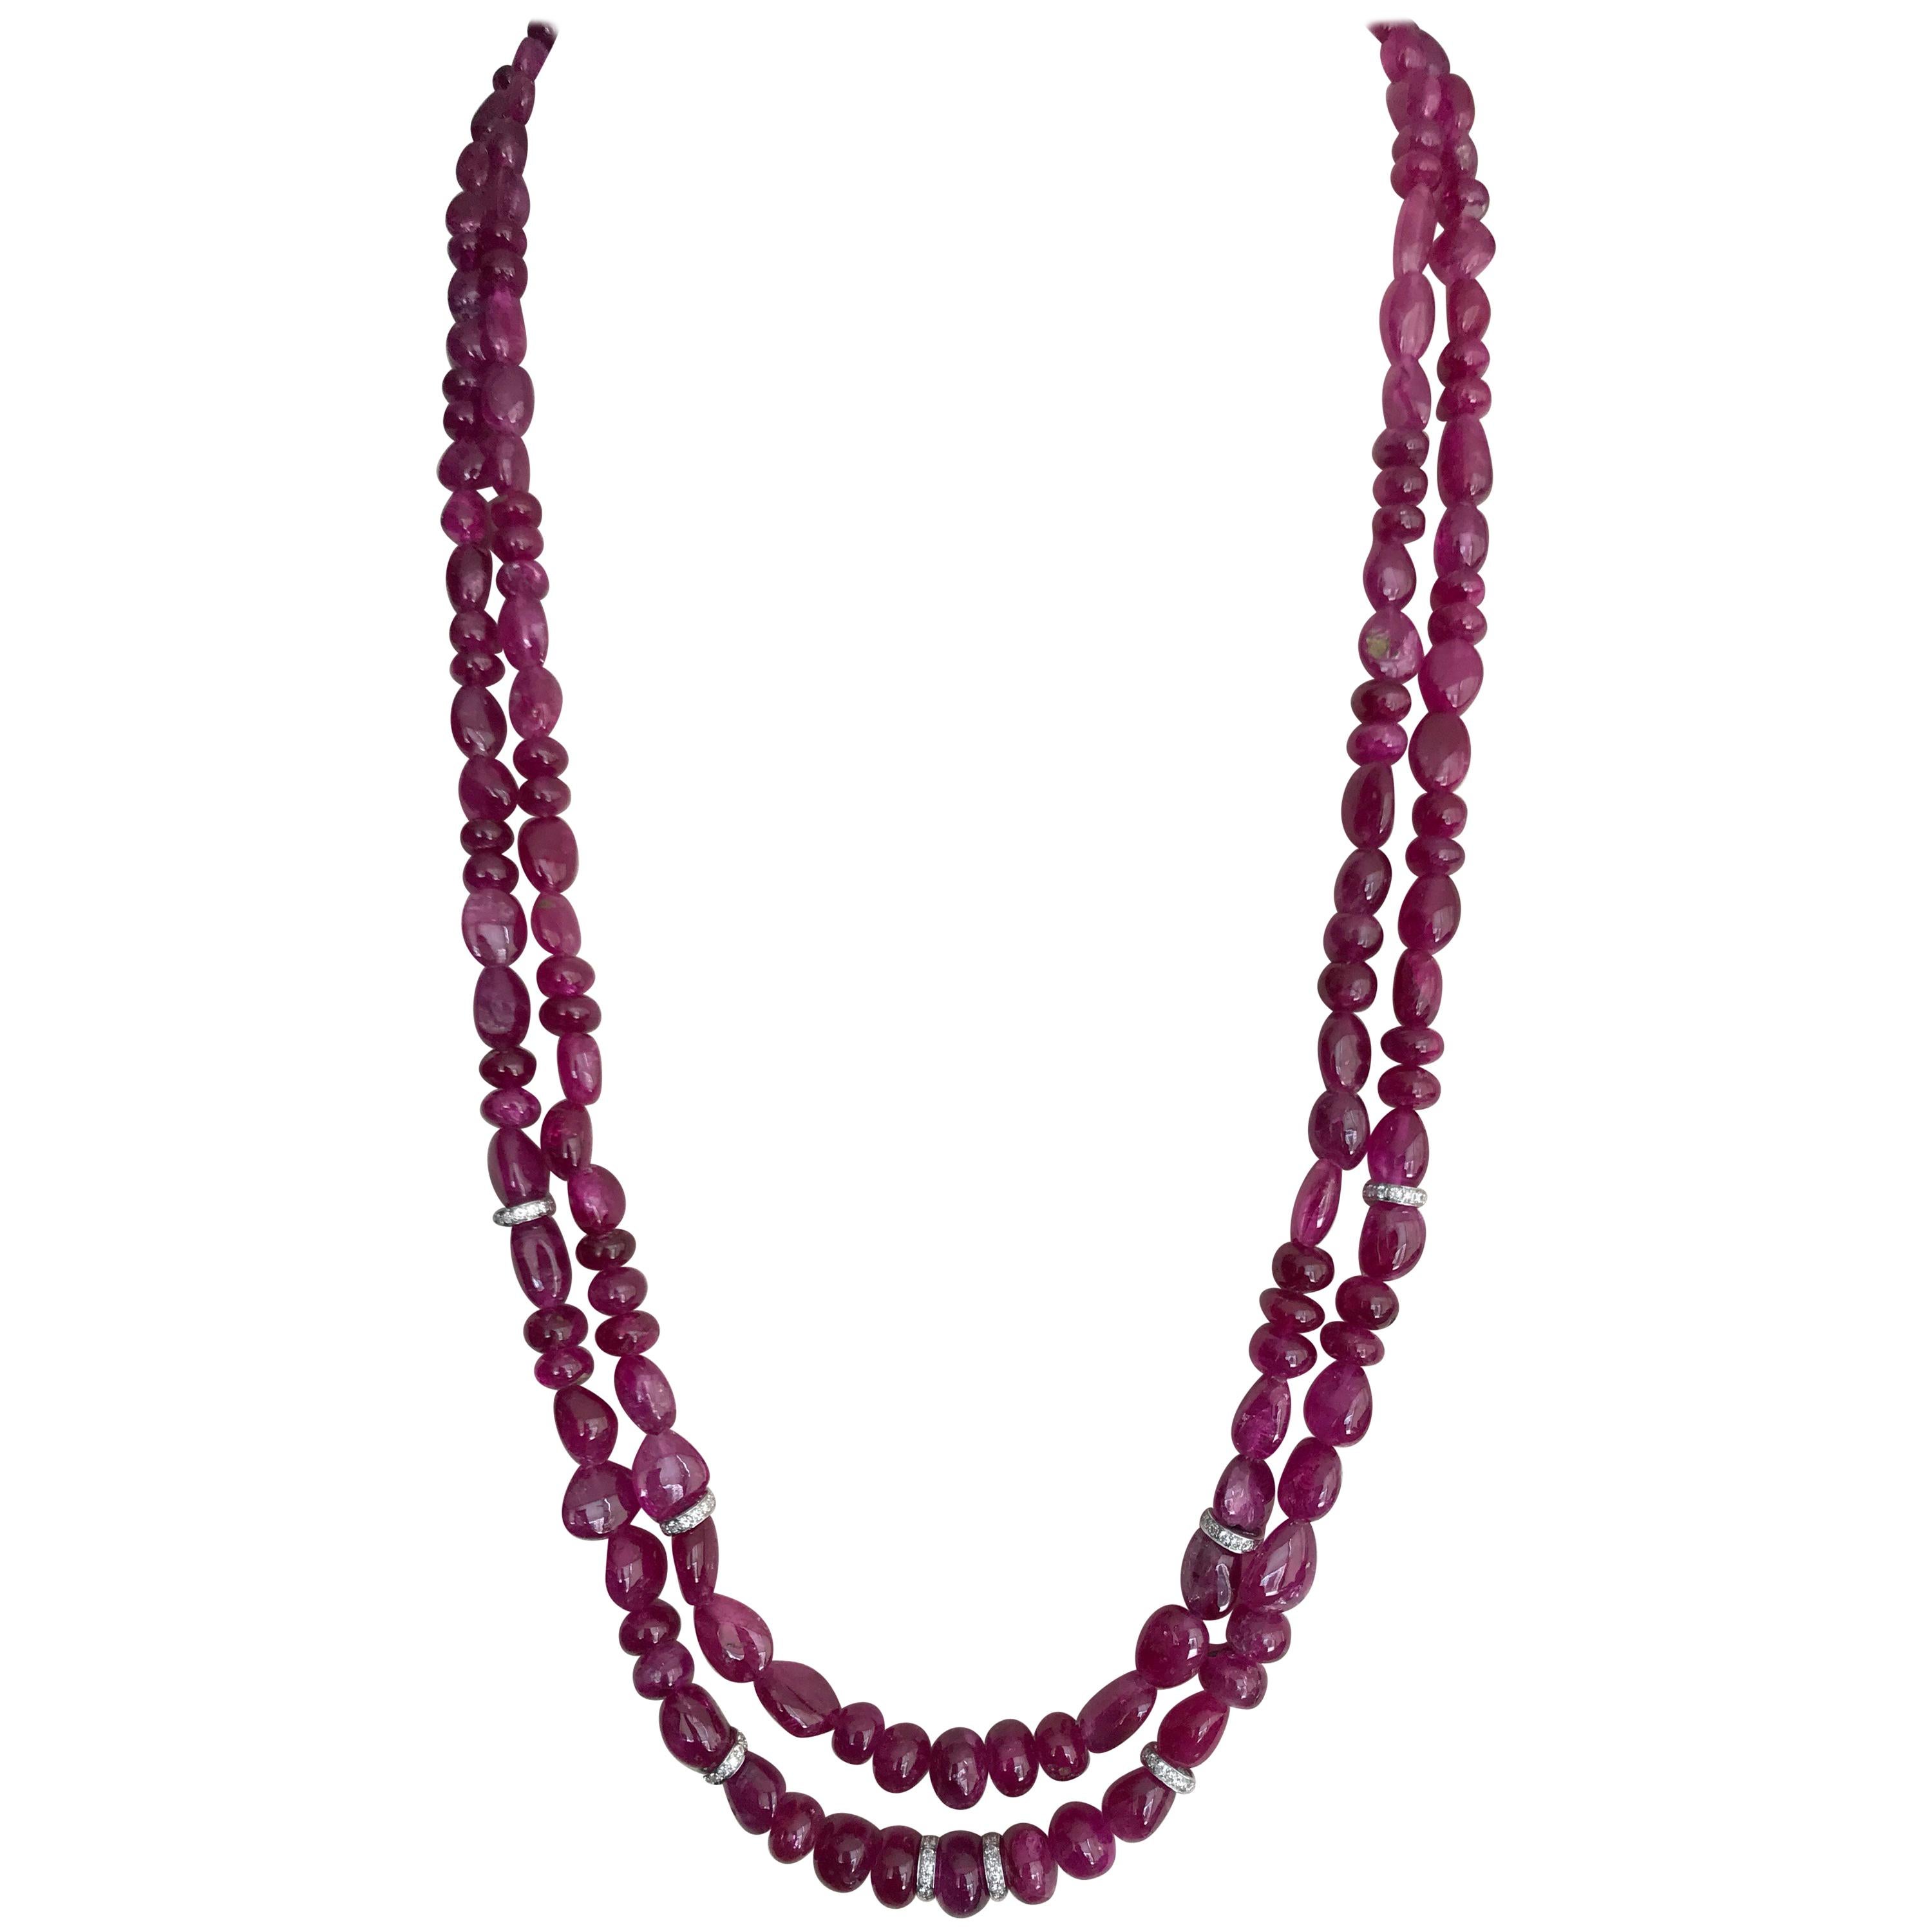 475 Carat Natural Burmese Ruby Beads Multi Strand Necklace